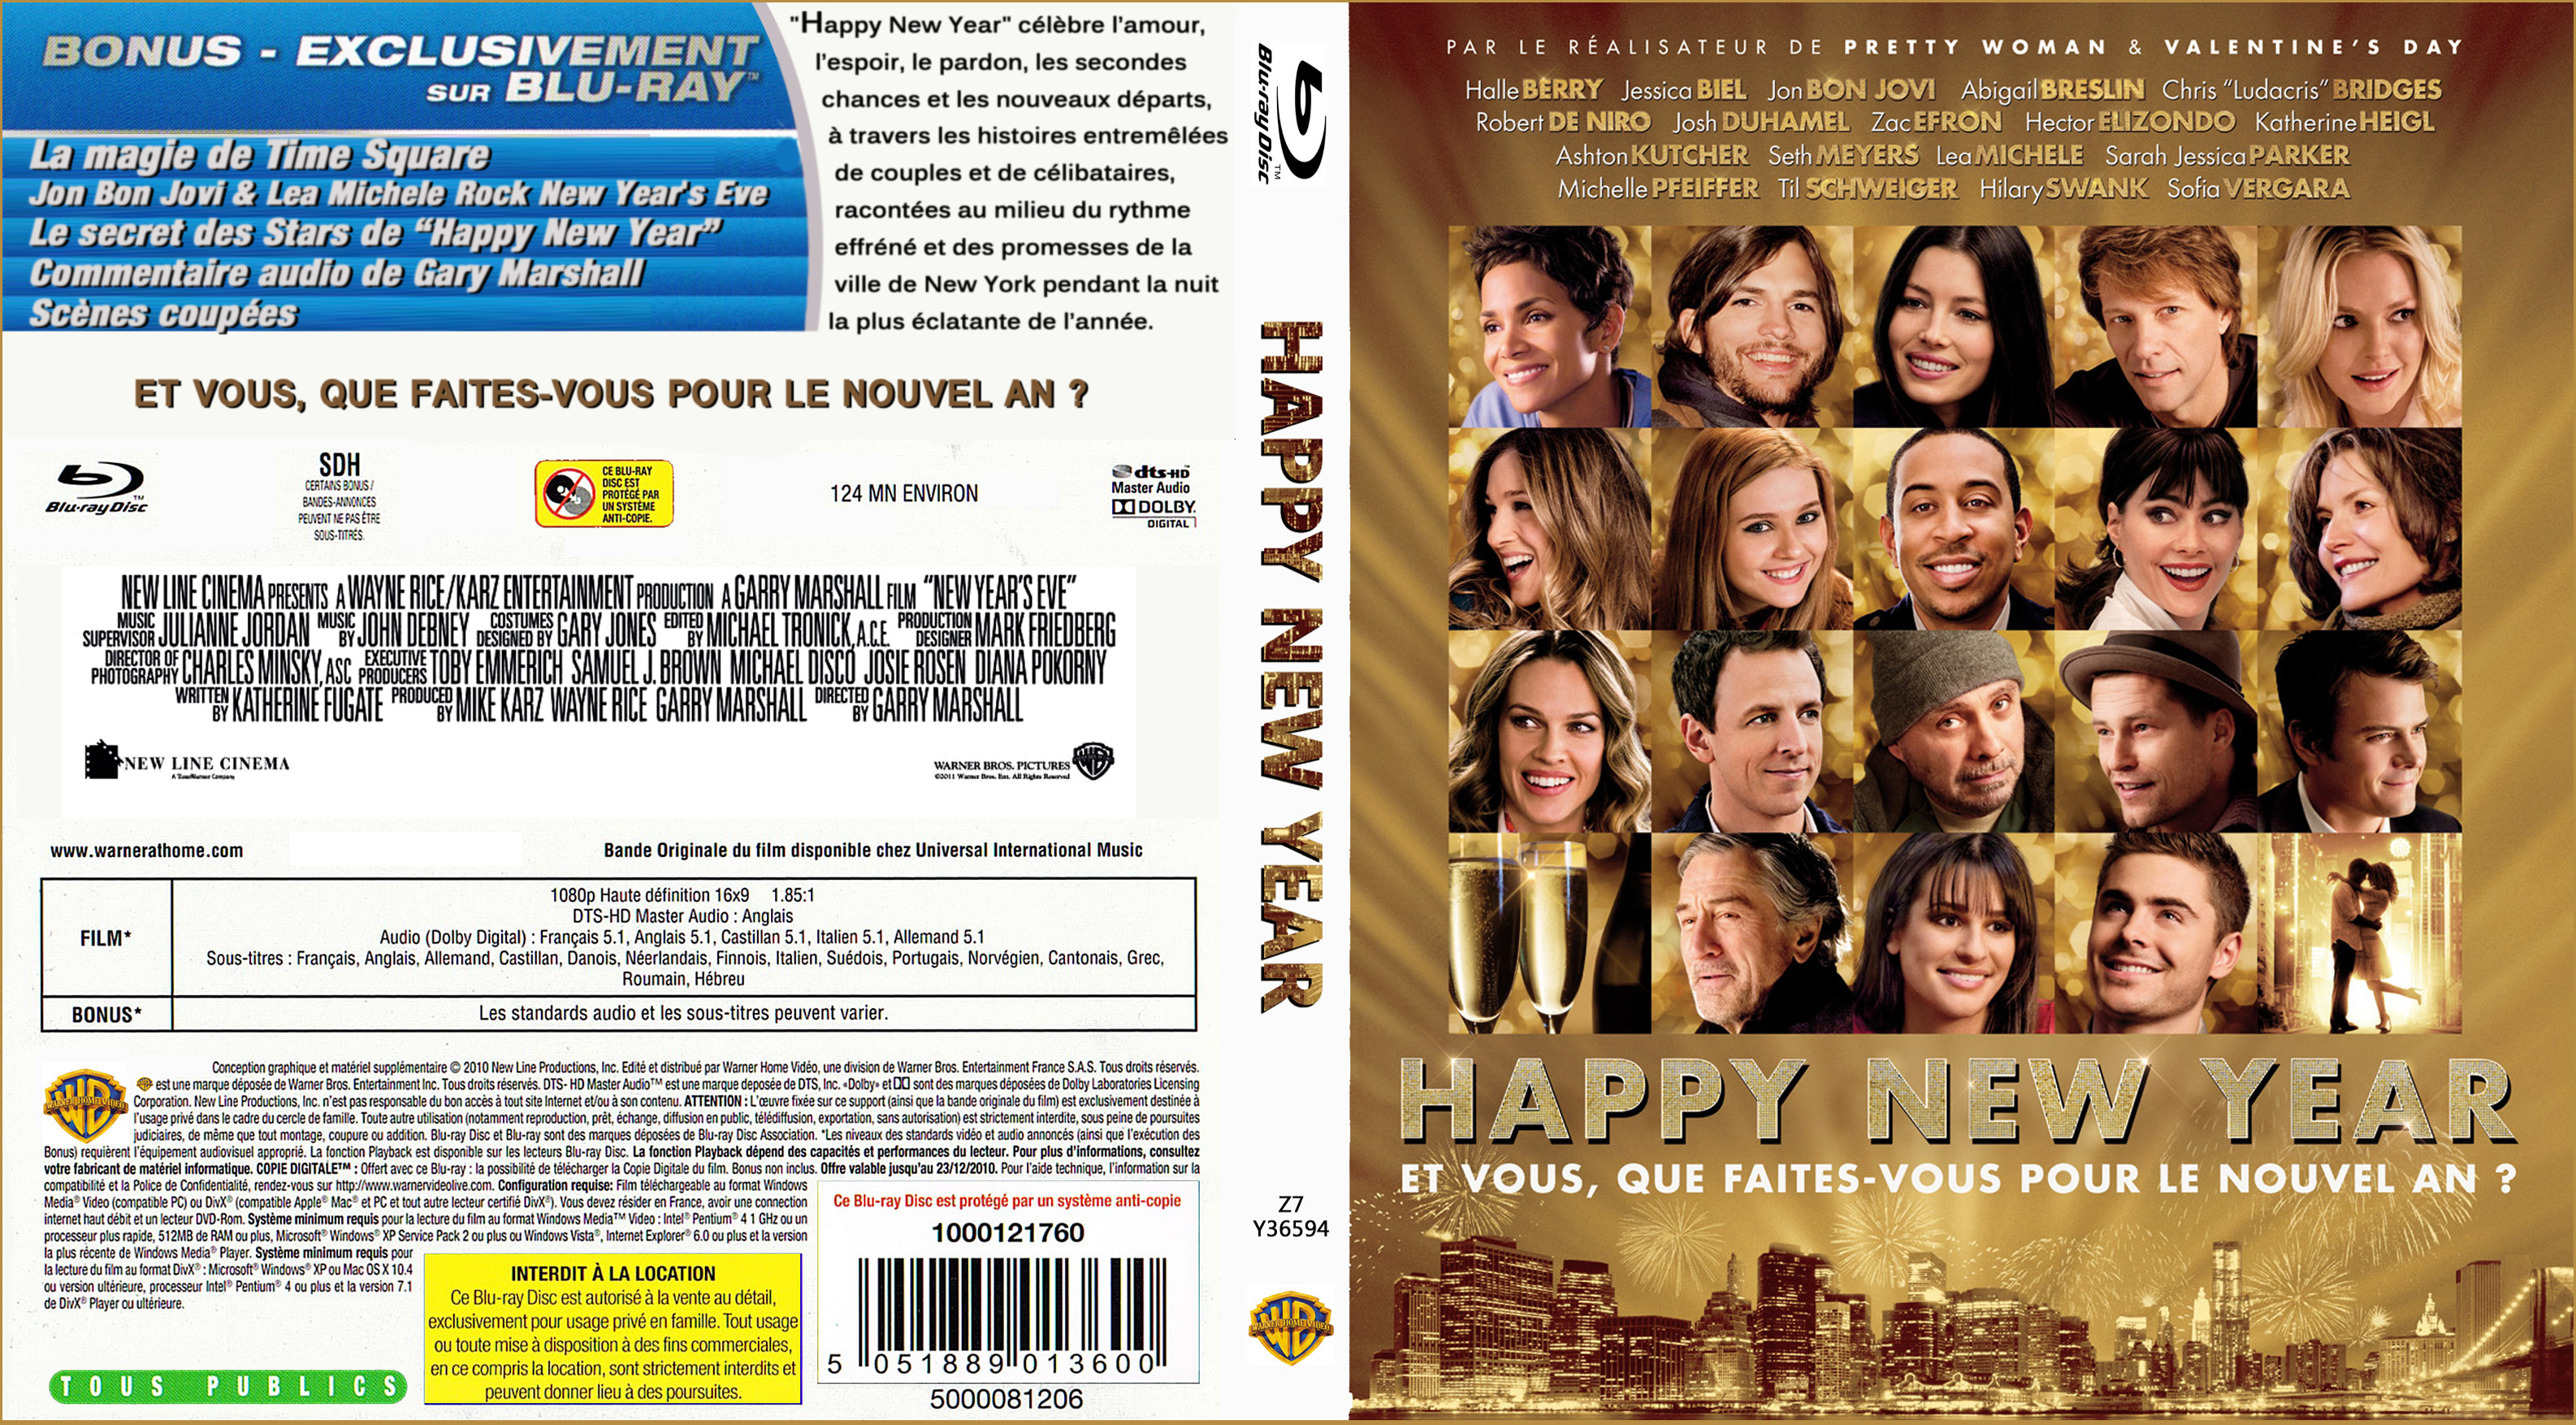 Jaquette DVD Happy new year (BLU-RAY) custom